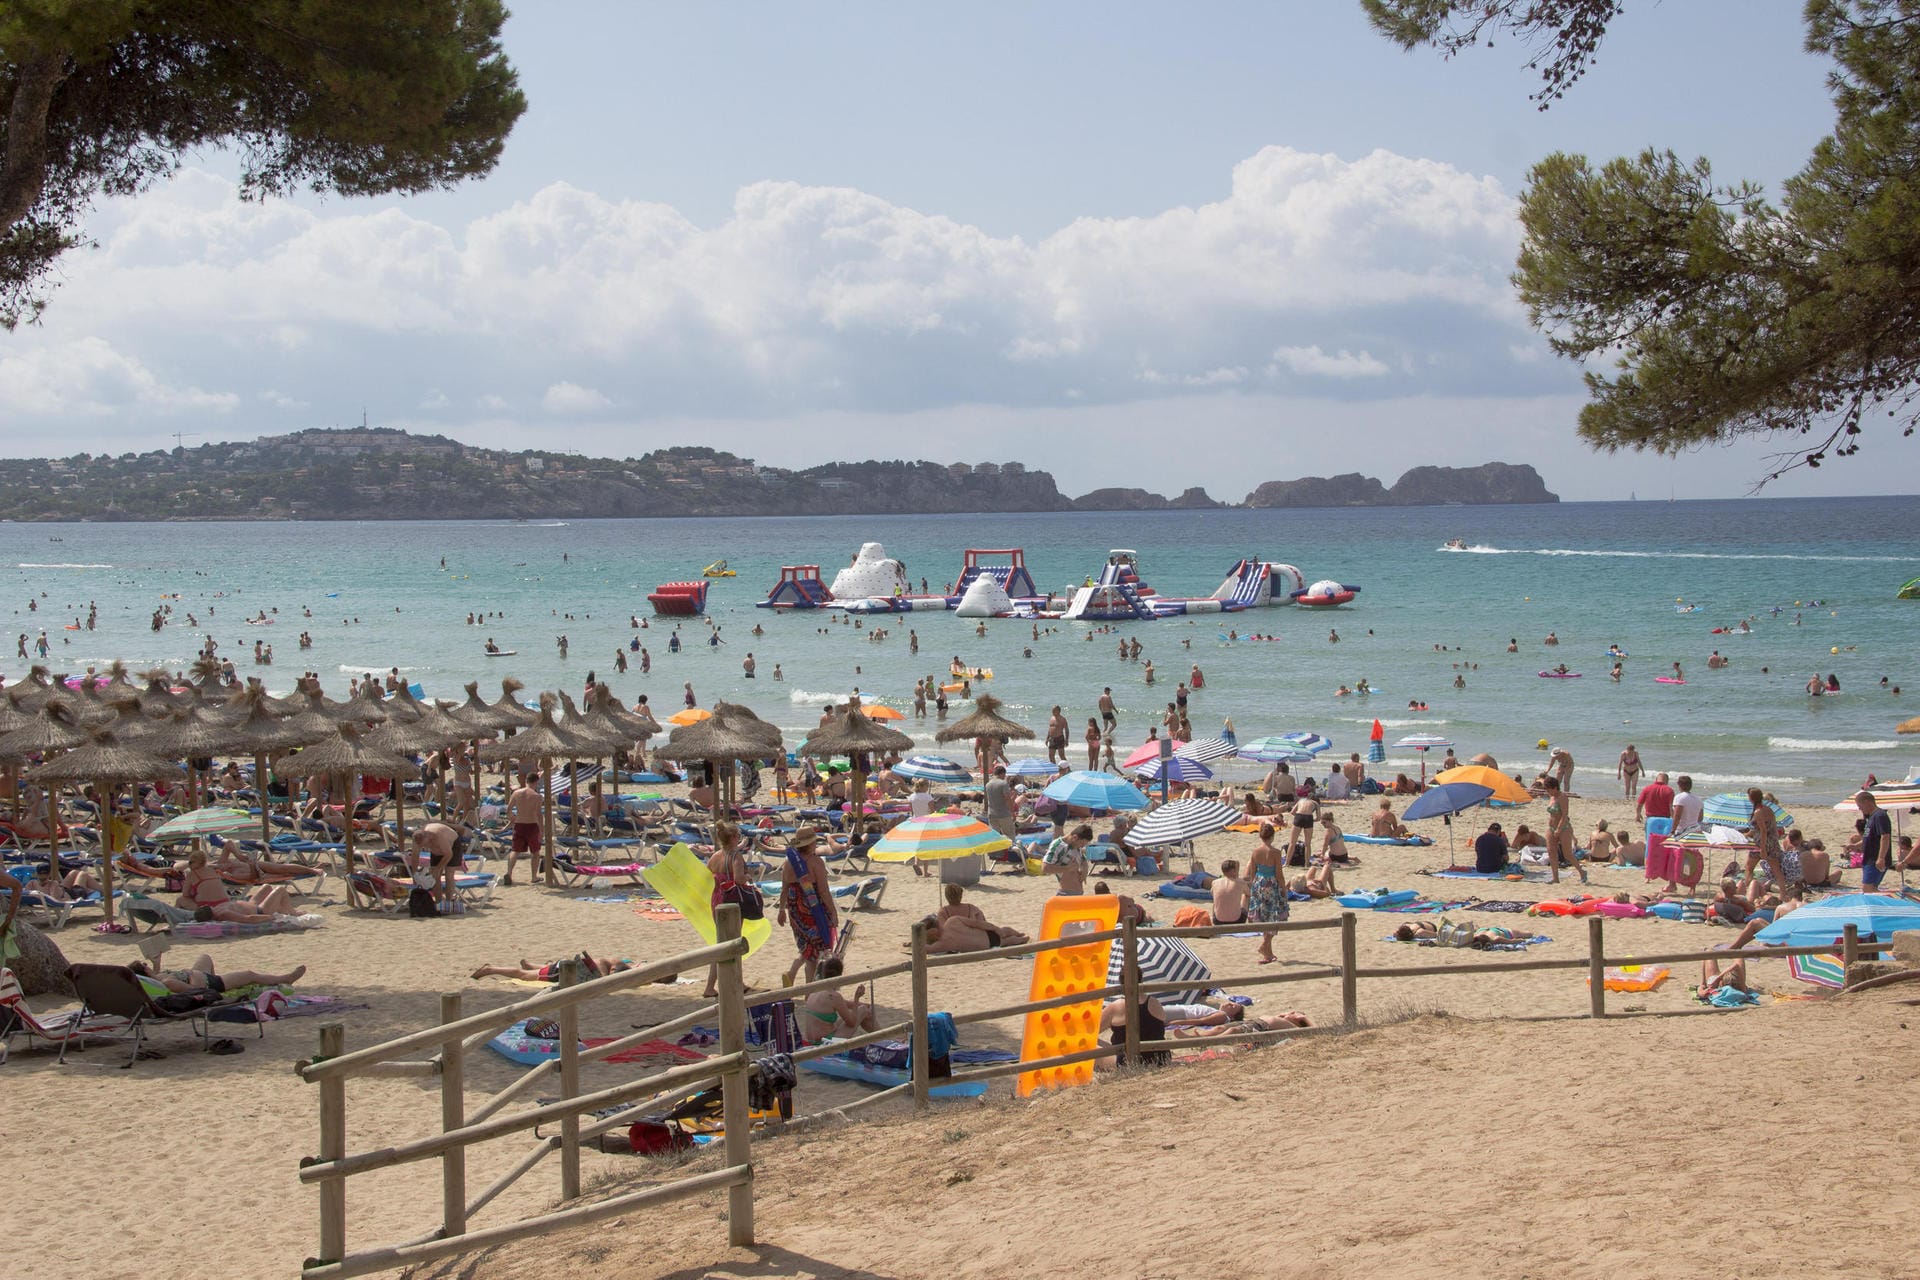 Denn in Mallorca kann man neben Erholung auch viele Partys finden.